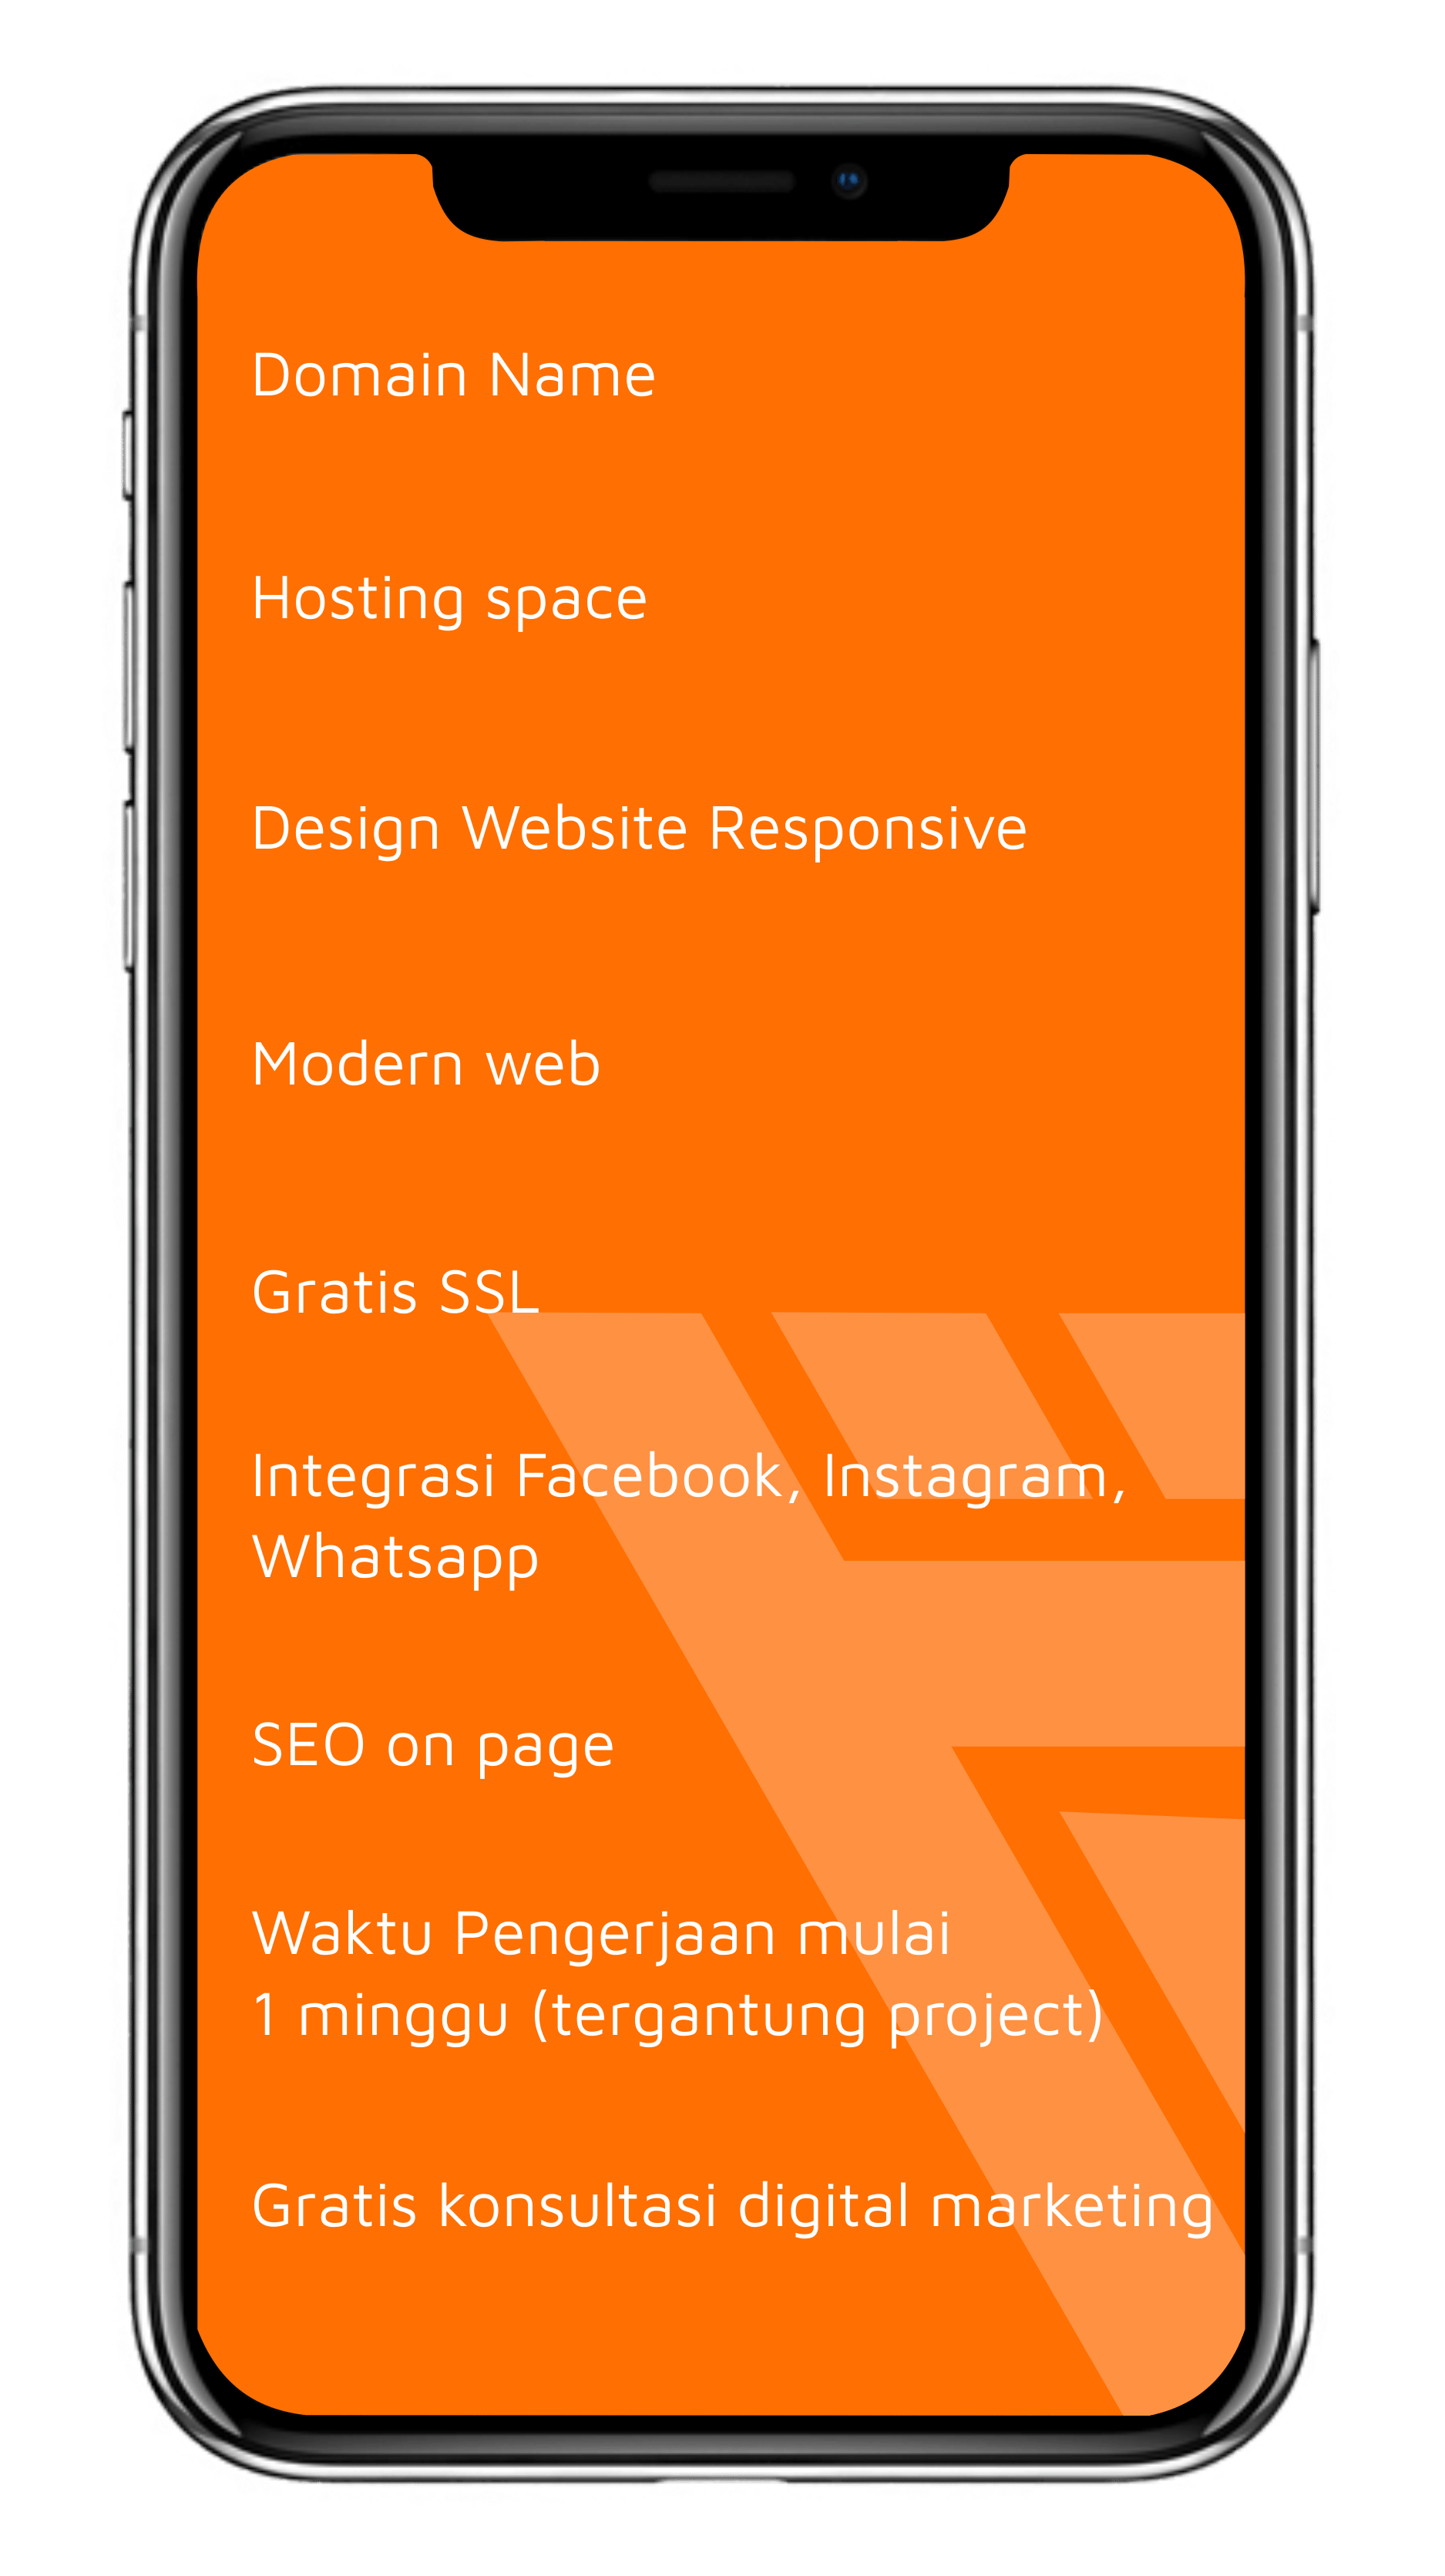 fidznet-jasa-web-desain-detail-layanan2